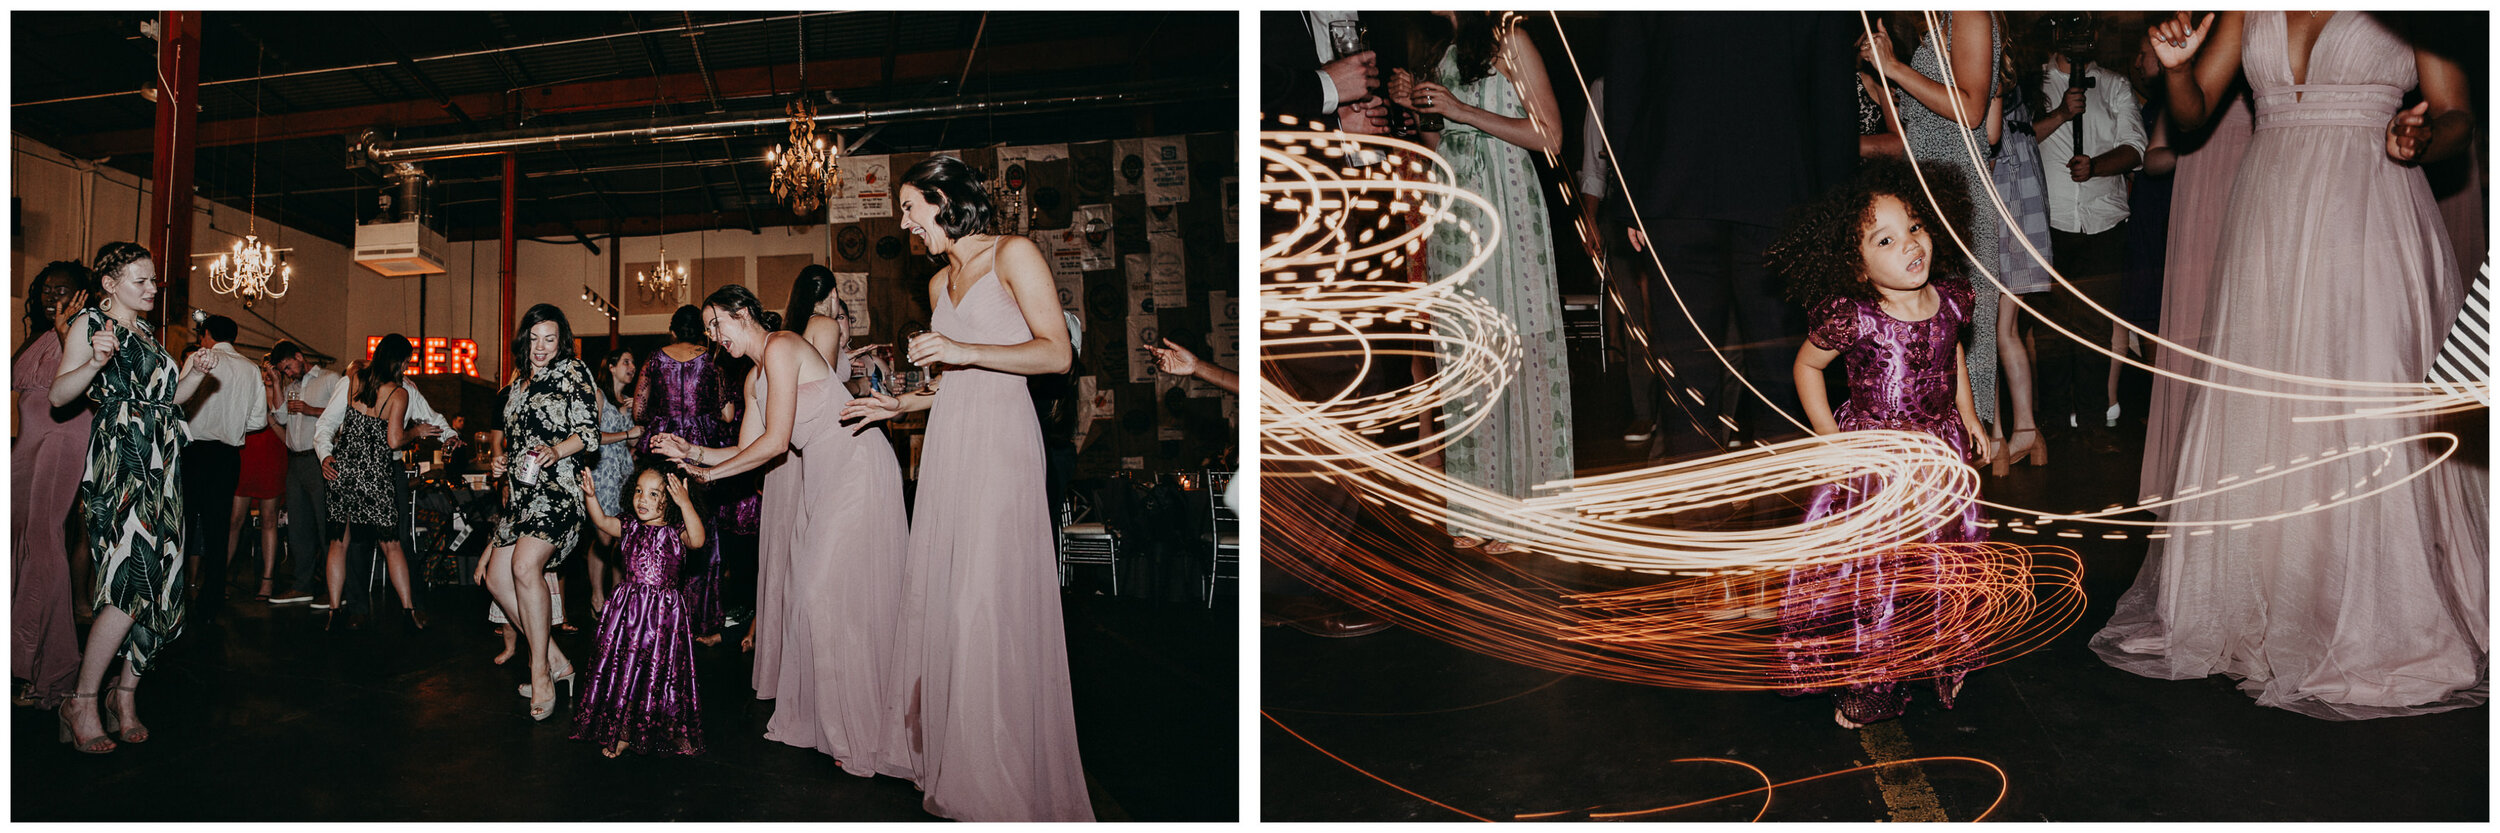 Monday Night Garage Wedding - Atlanta,Ga - Aline Marin Photography74.jpg